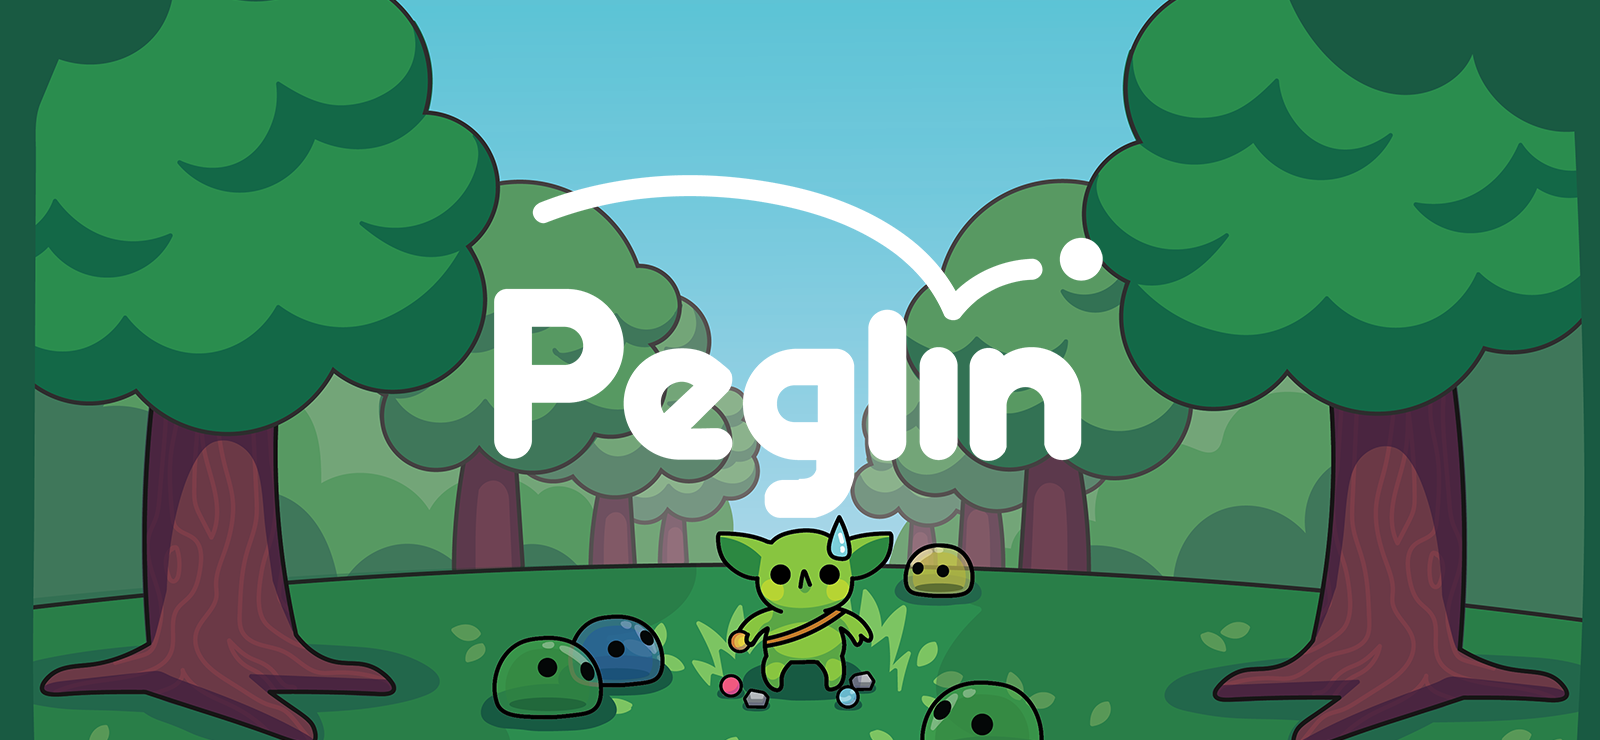 Peglin Release Plan (+ Demo Available Now!) - Peglin - A Pachinko